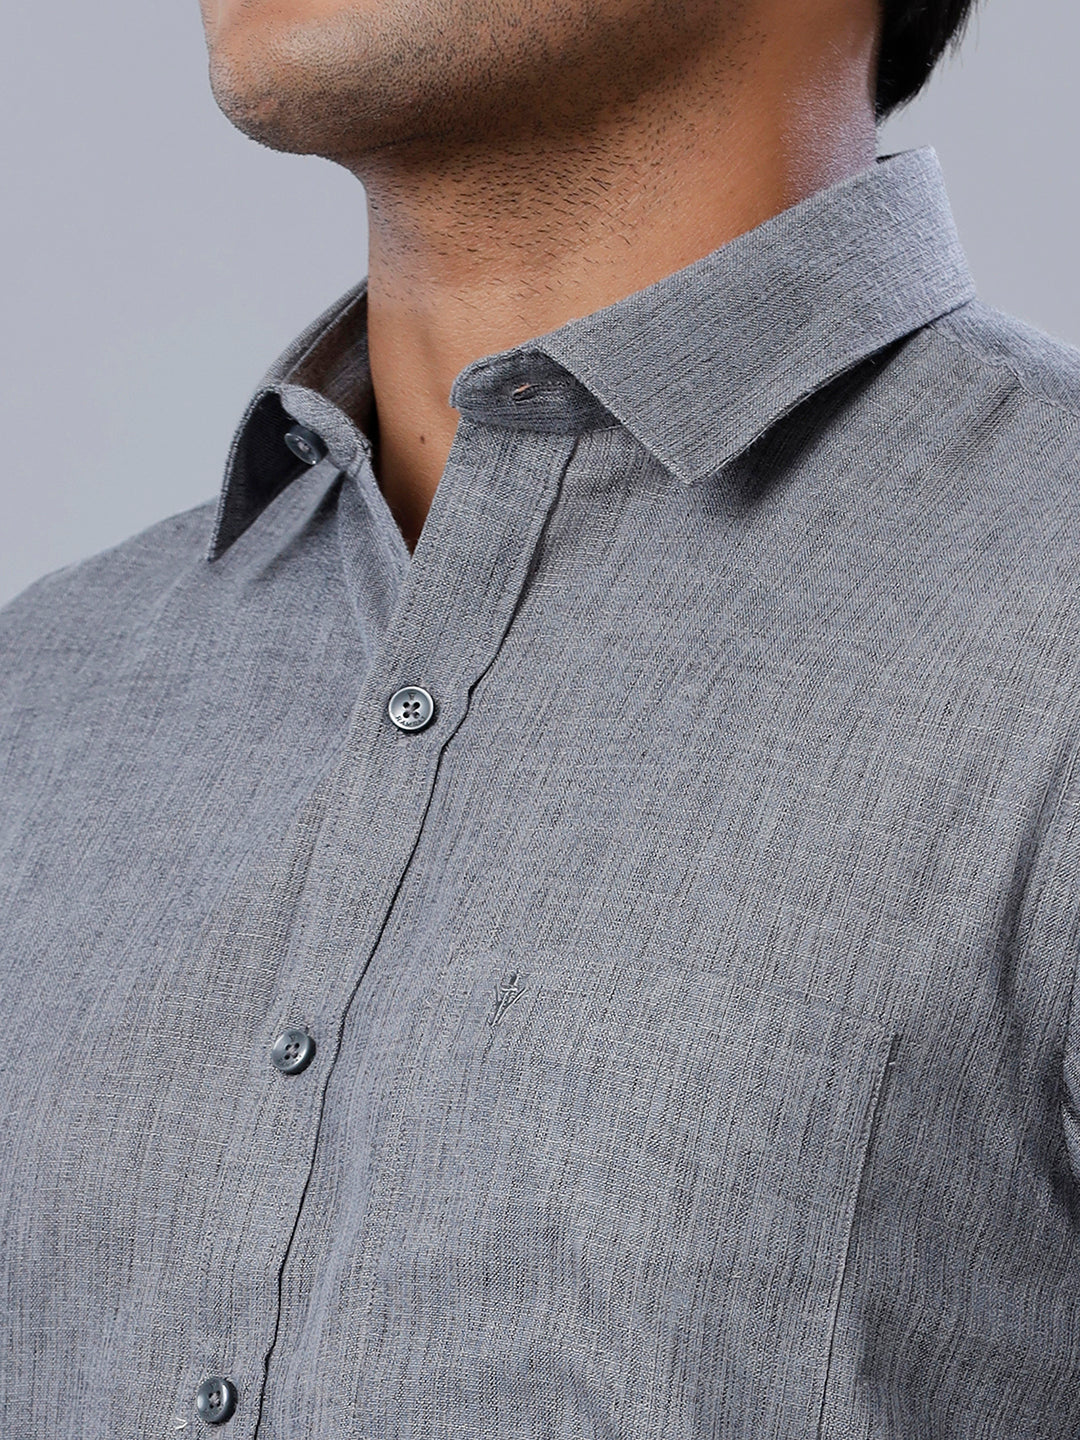 Mens Formal Shirt Full Sleeves Grey T26 TB7-Zoom view